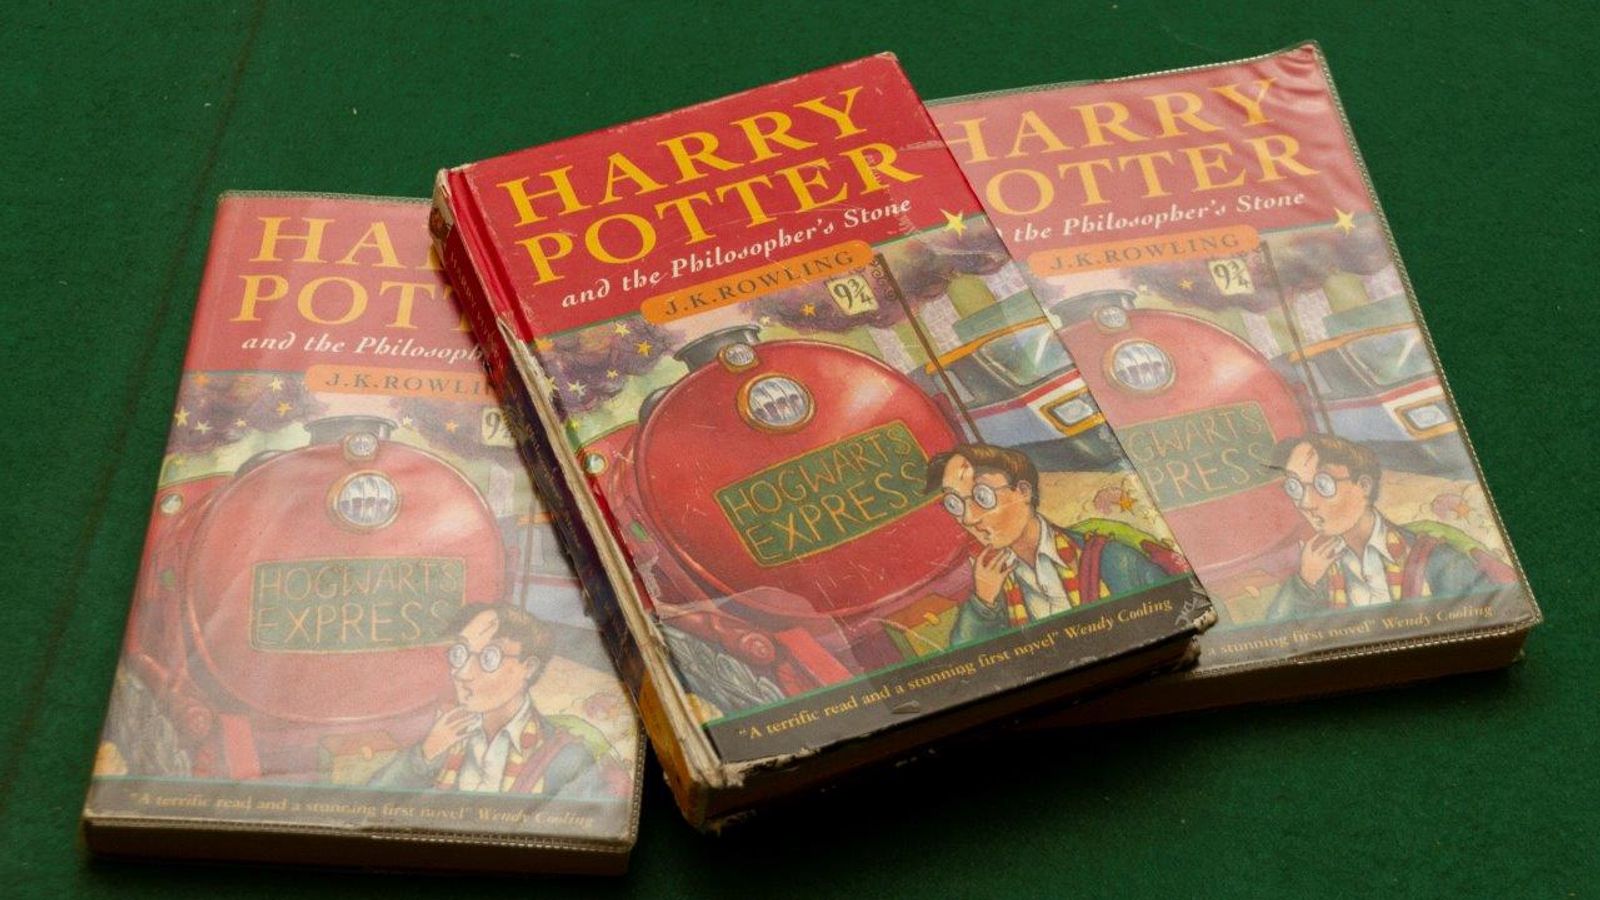 harry potter 1st book